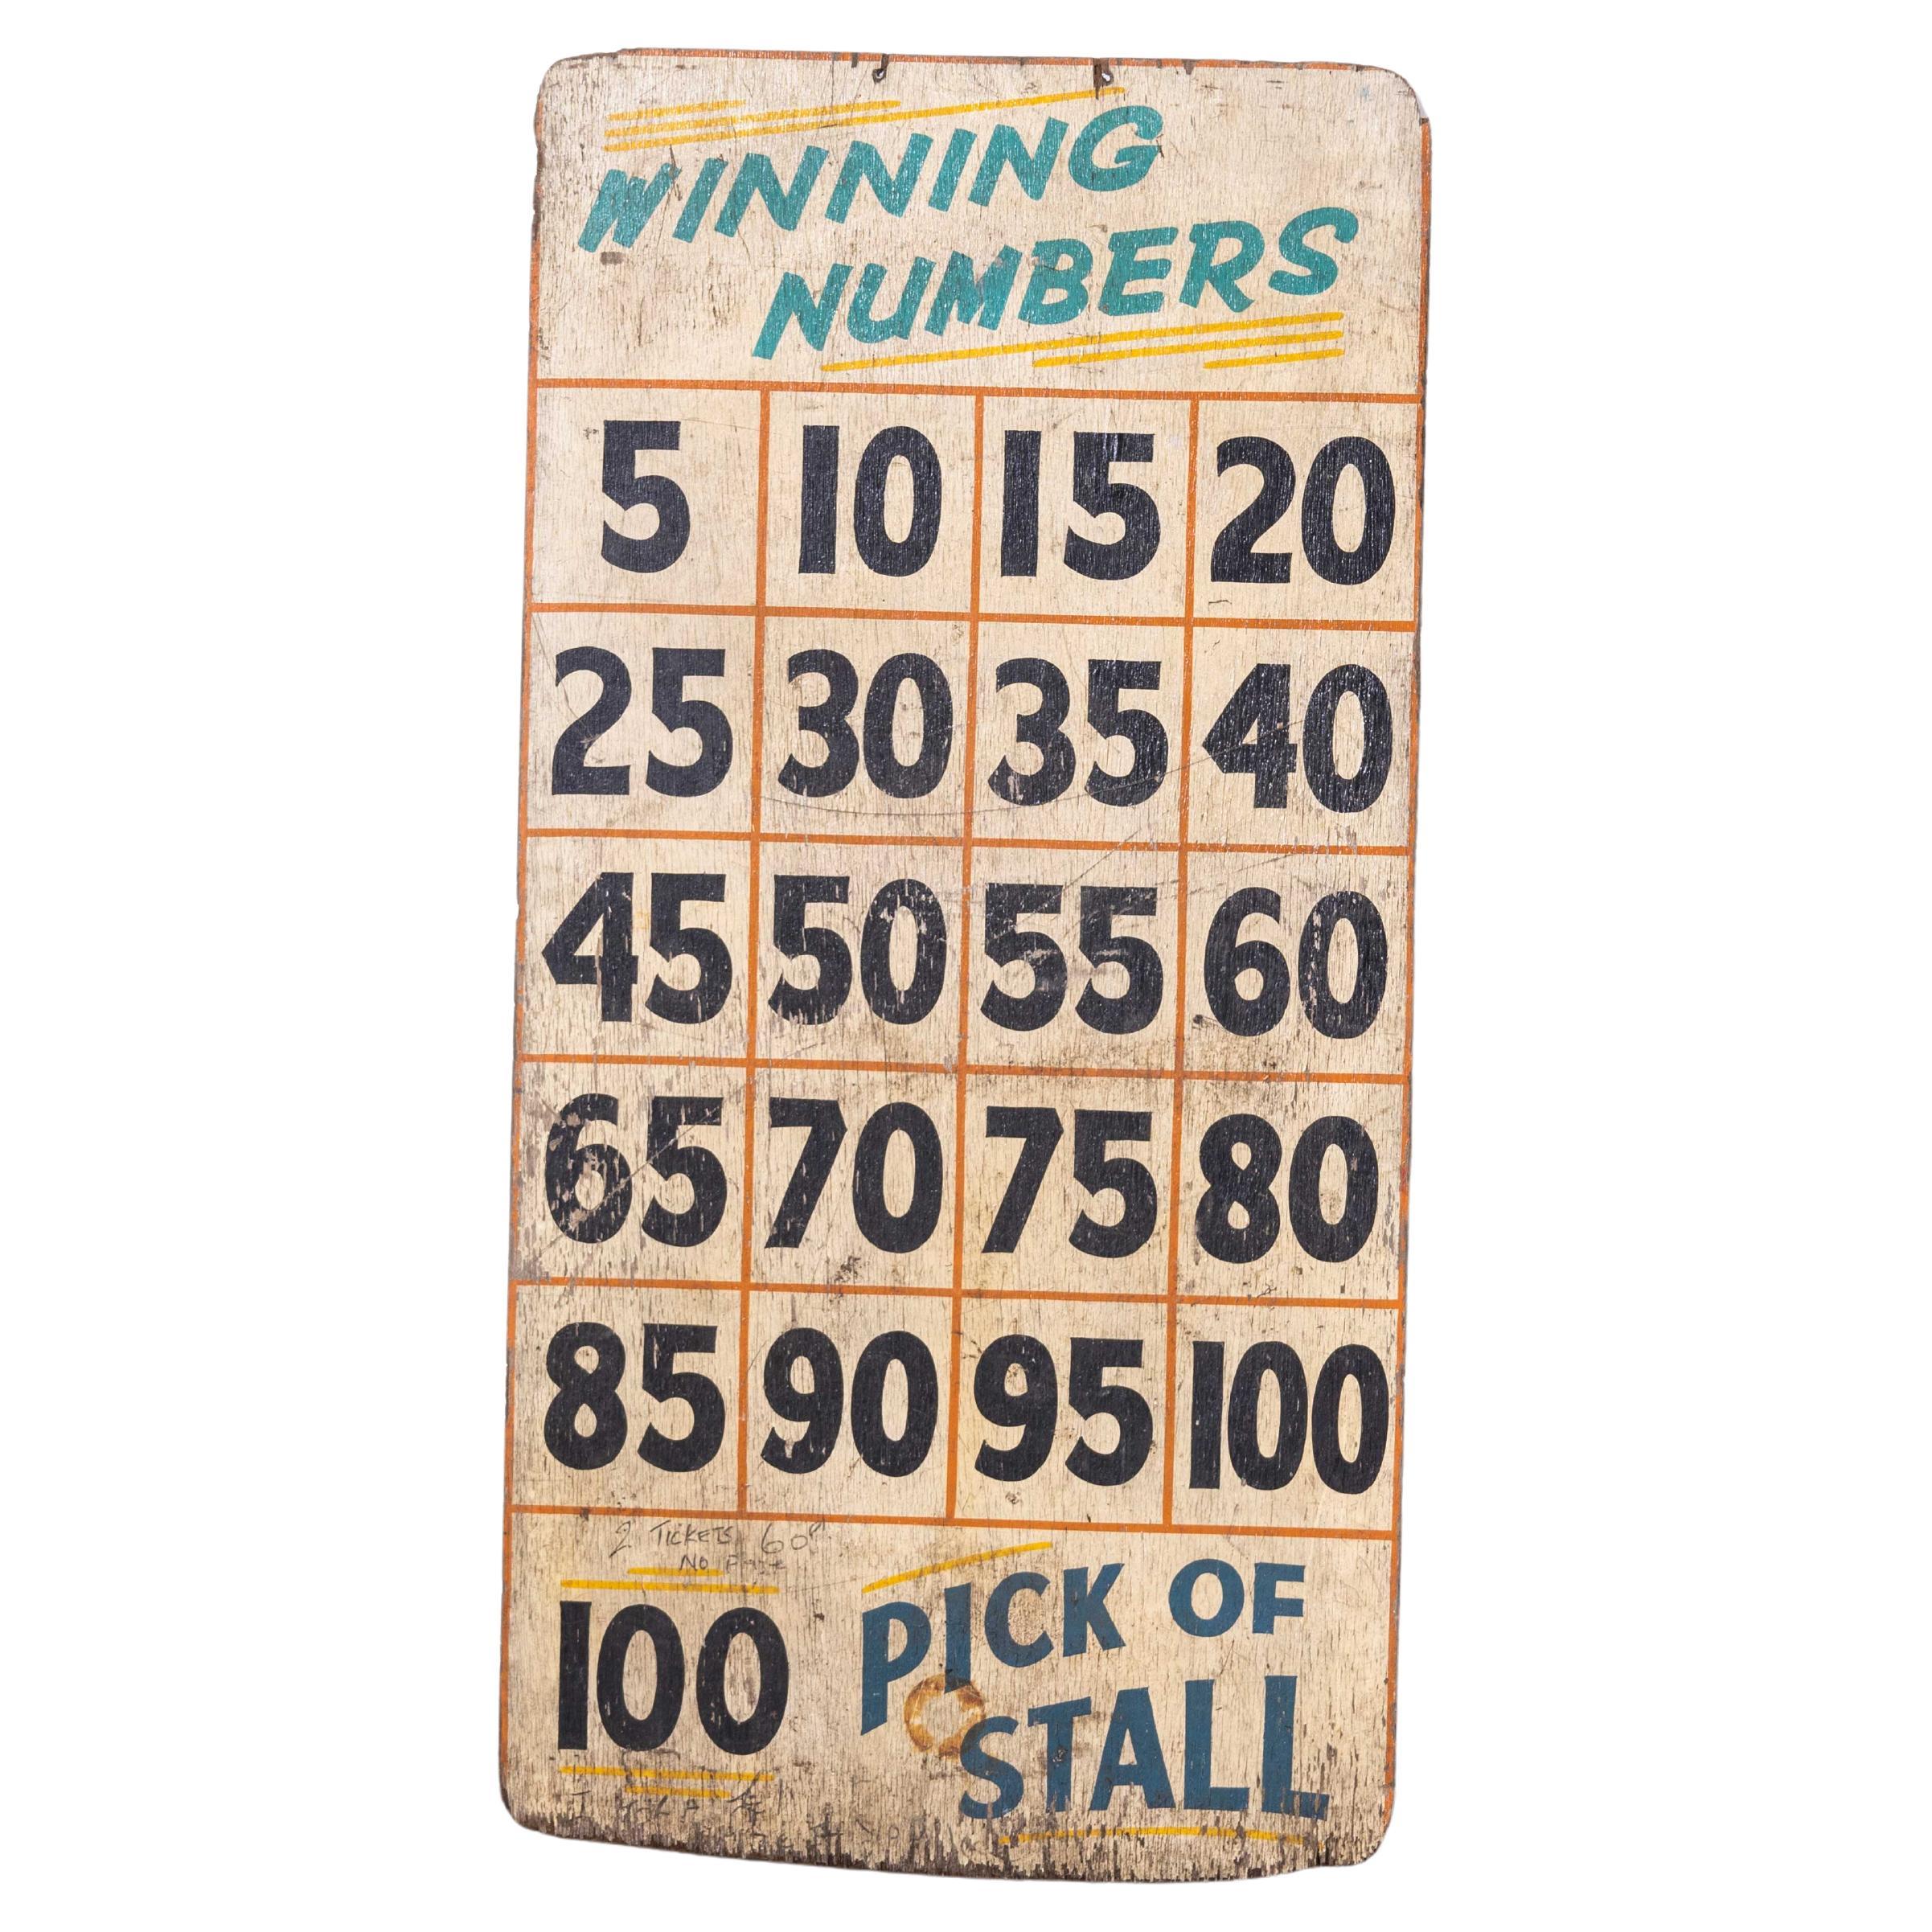 Grand panneau d'affichage original « Winning Numbers » des années 1950